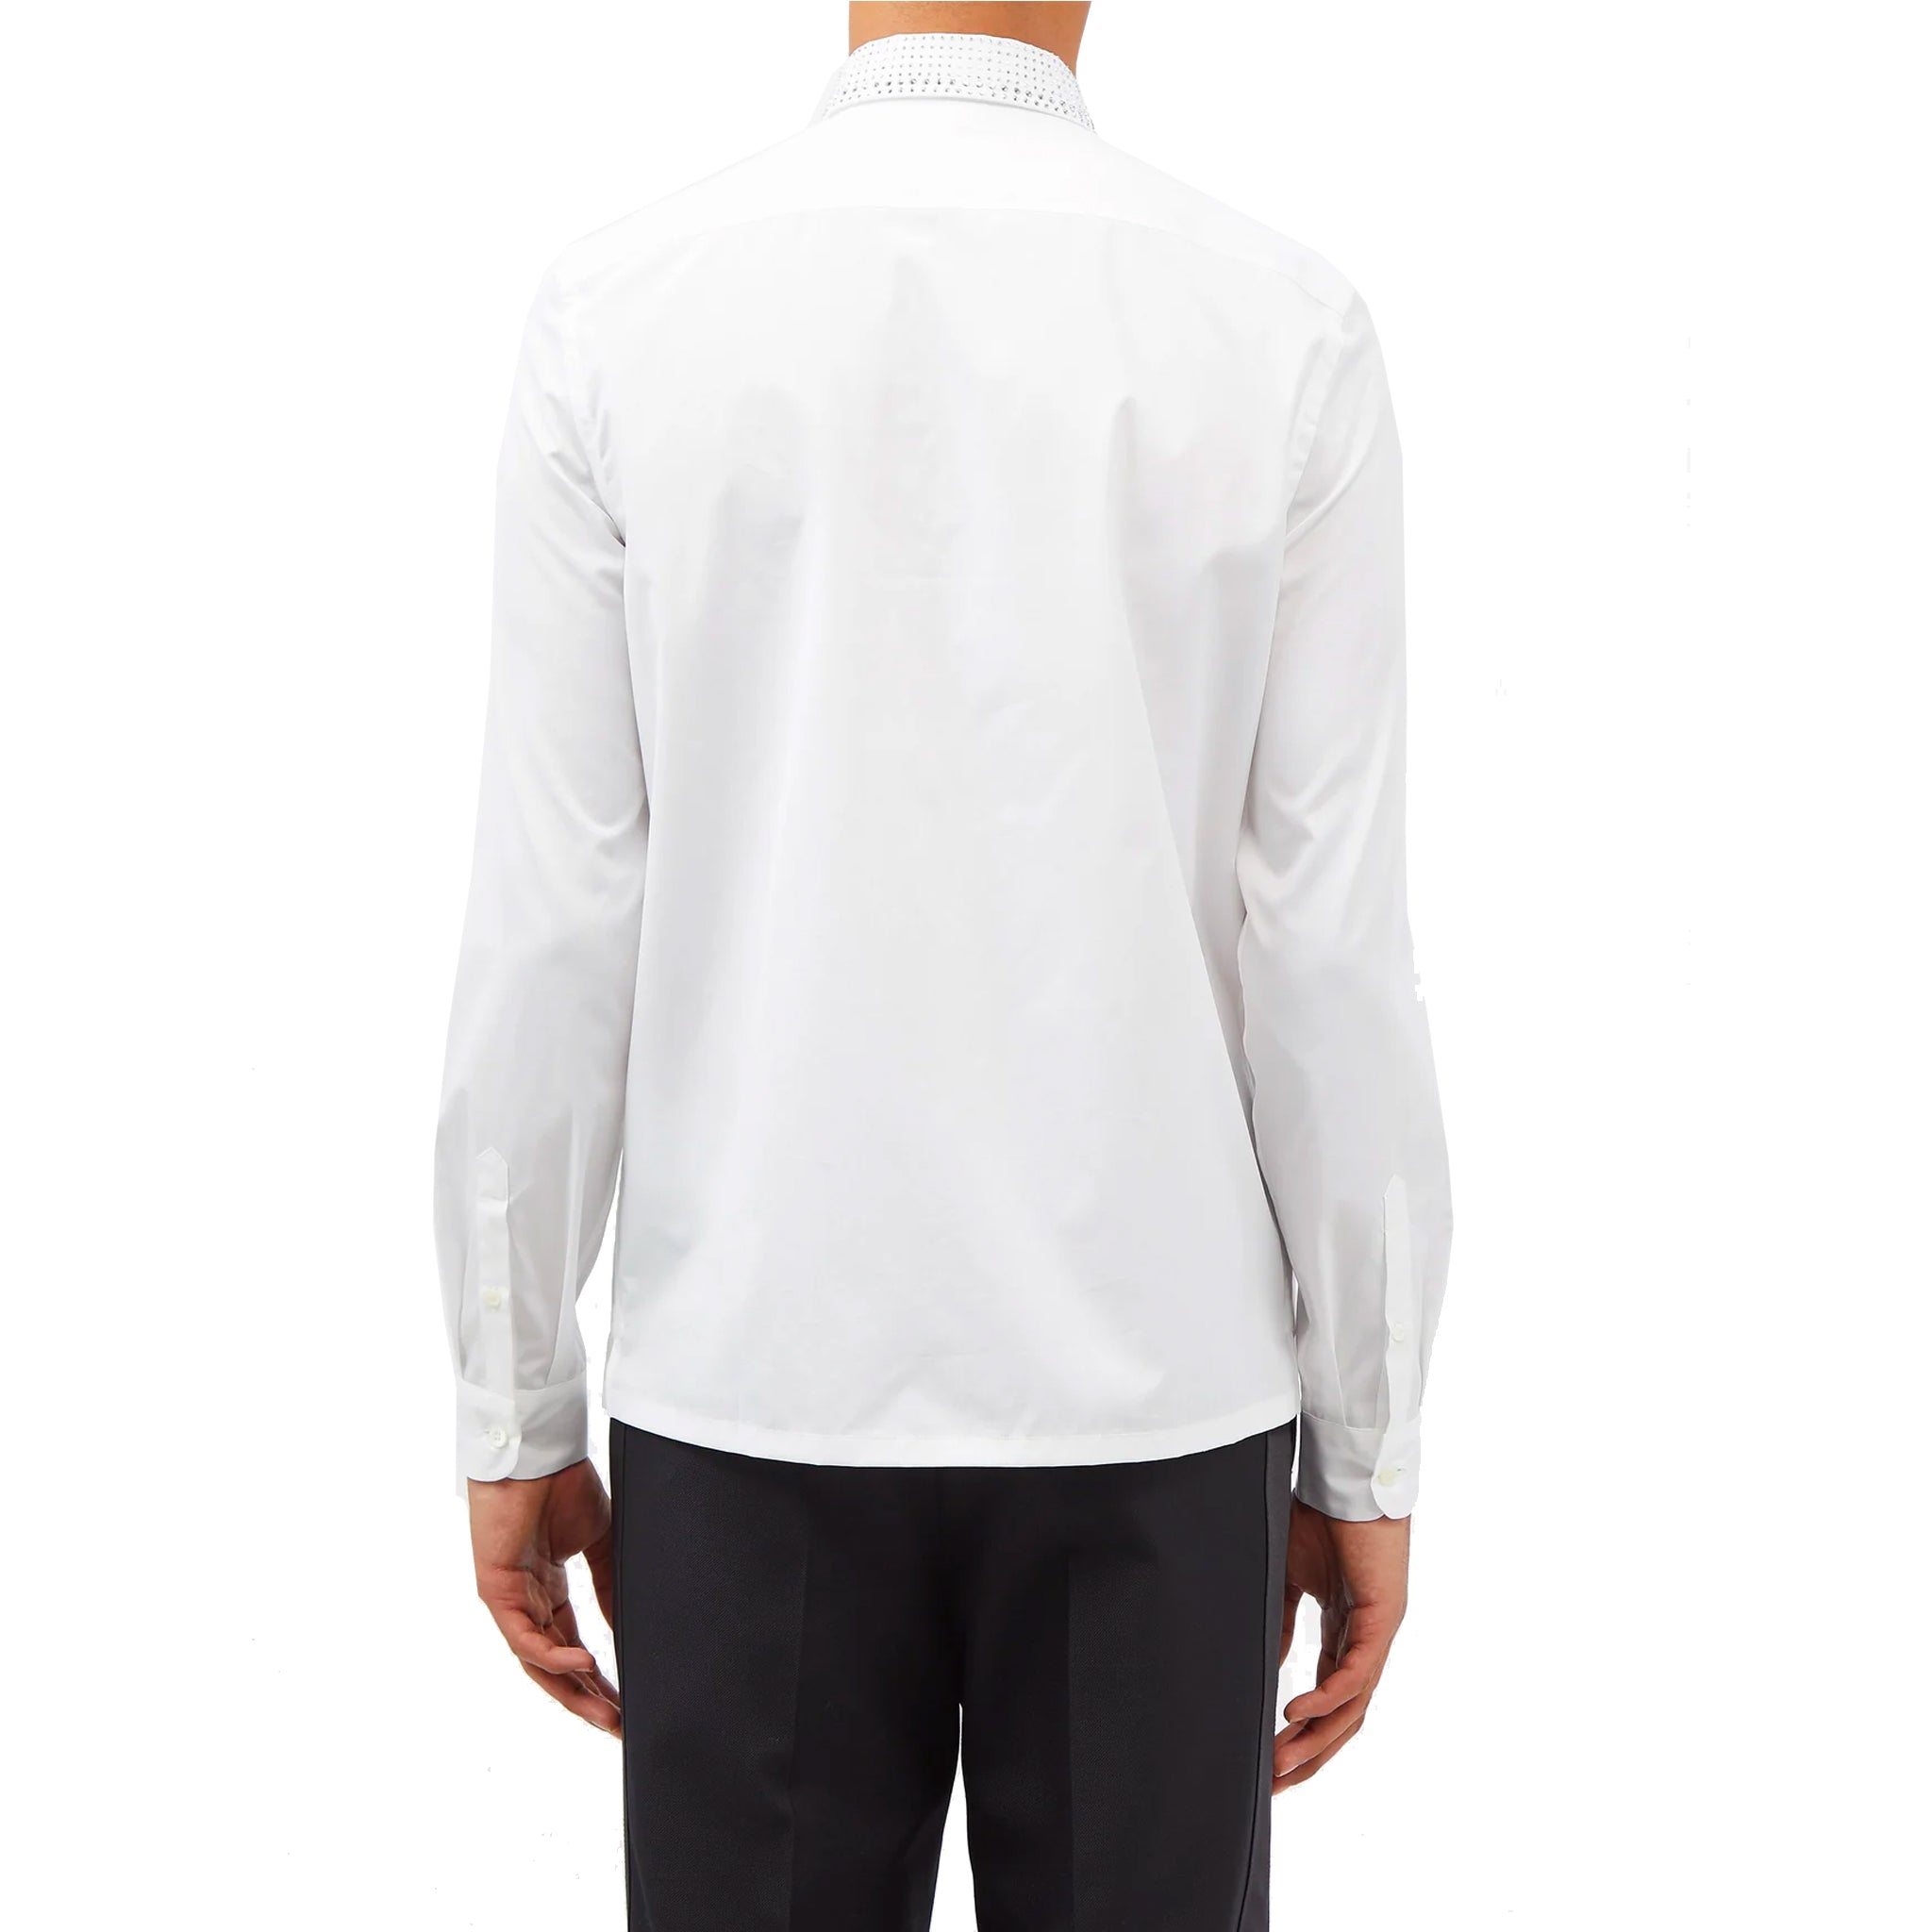 PRADA-Outlet-Sale-Prada Studded Crystal Collar Shirt-MEN CLOTHING-ARCHIVIST